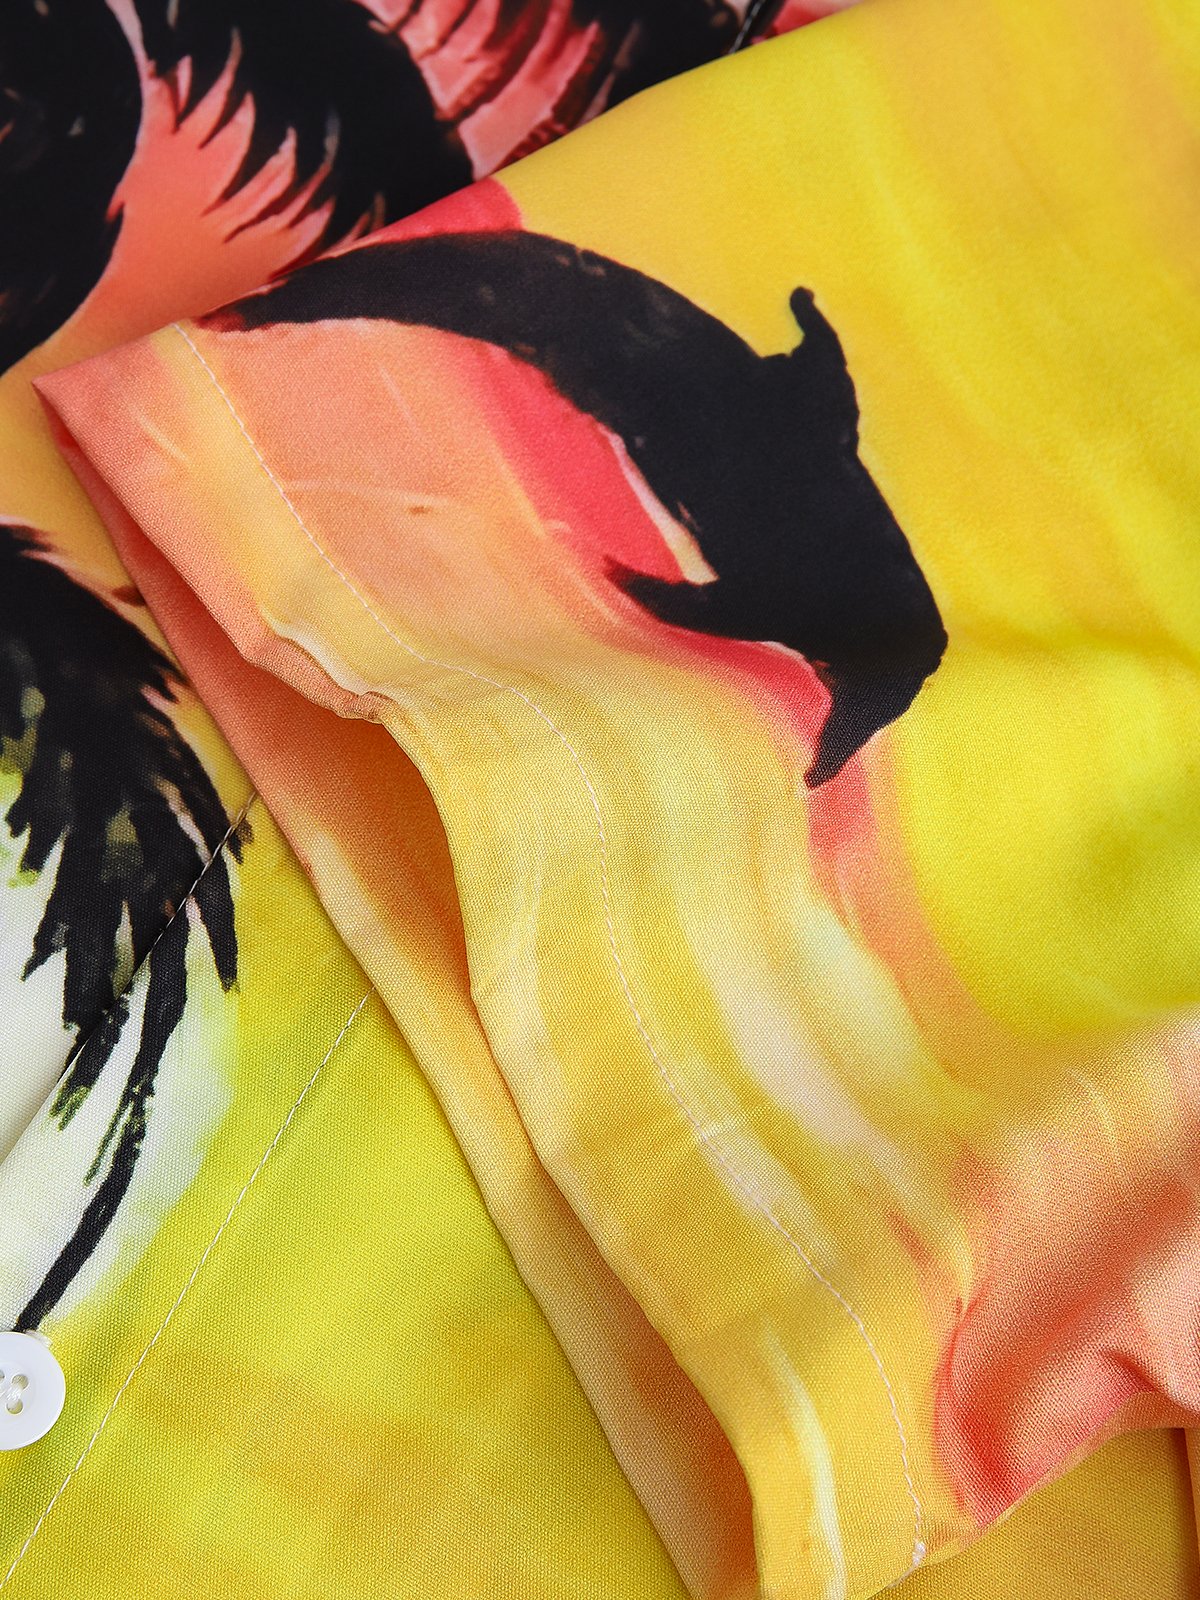 Men's Breathable Cool Fabric Printed Casual Breathable Hawaiian Short Sleeve Shirt